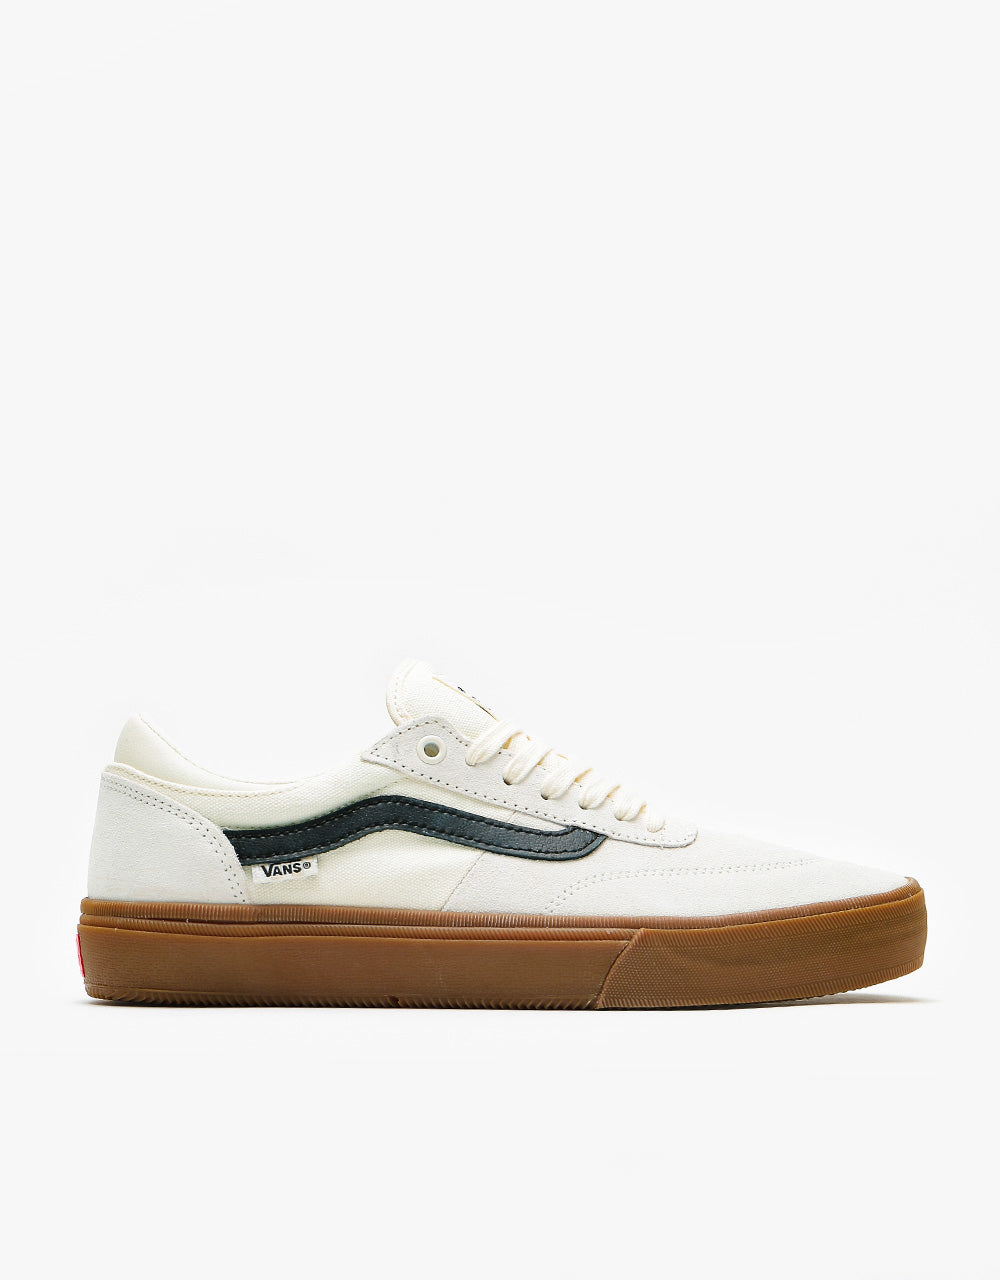 Vans Gilbert Crockett Pro Skate Shoes - Marshmallow/Gum